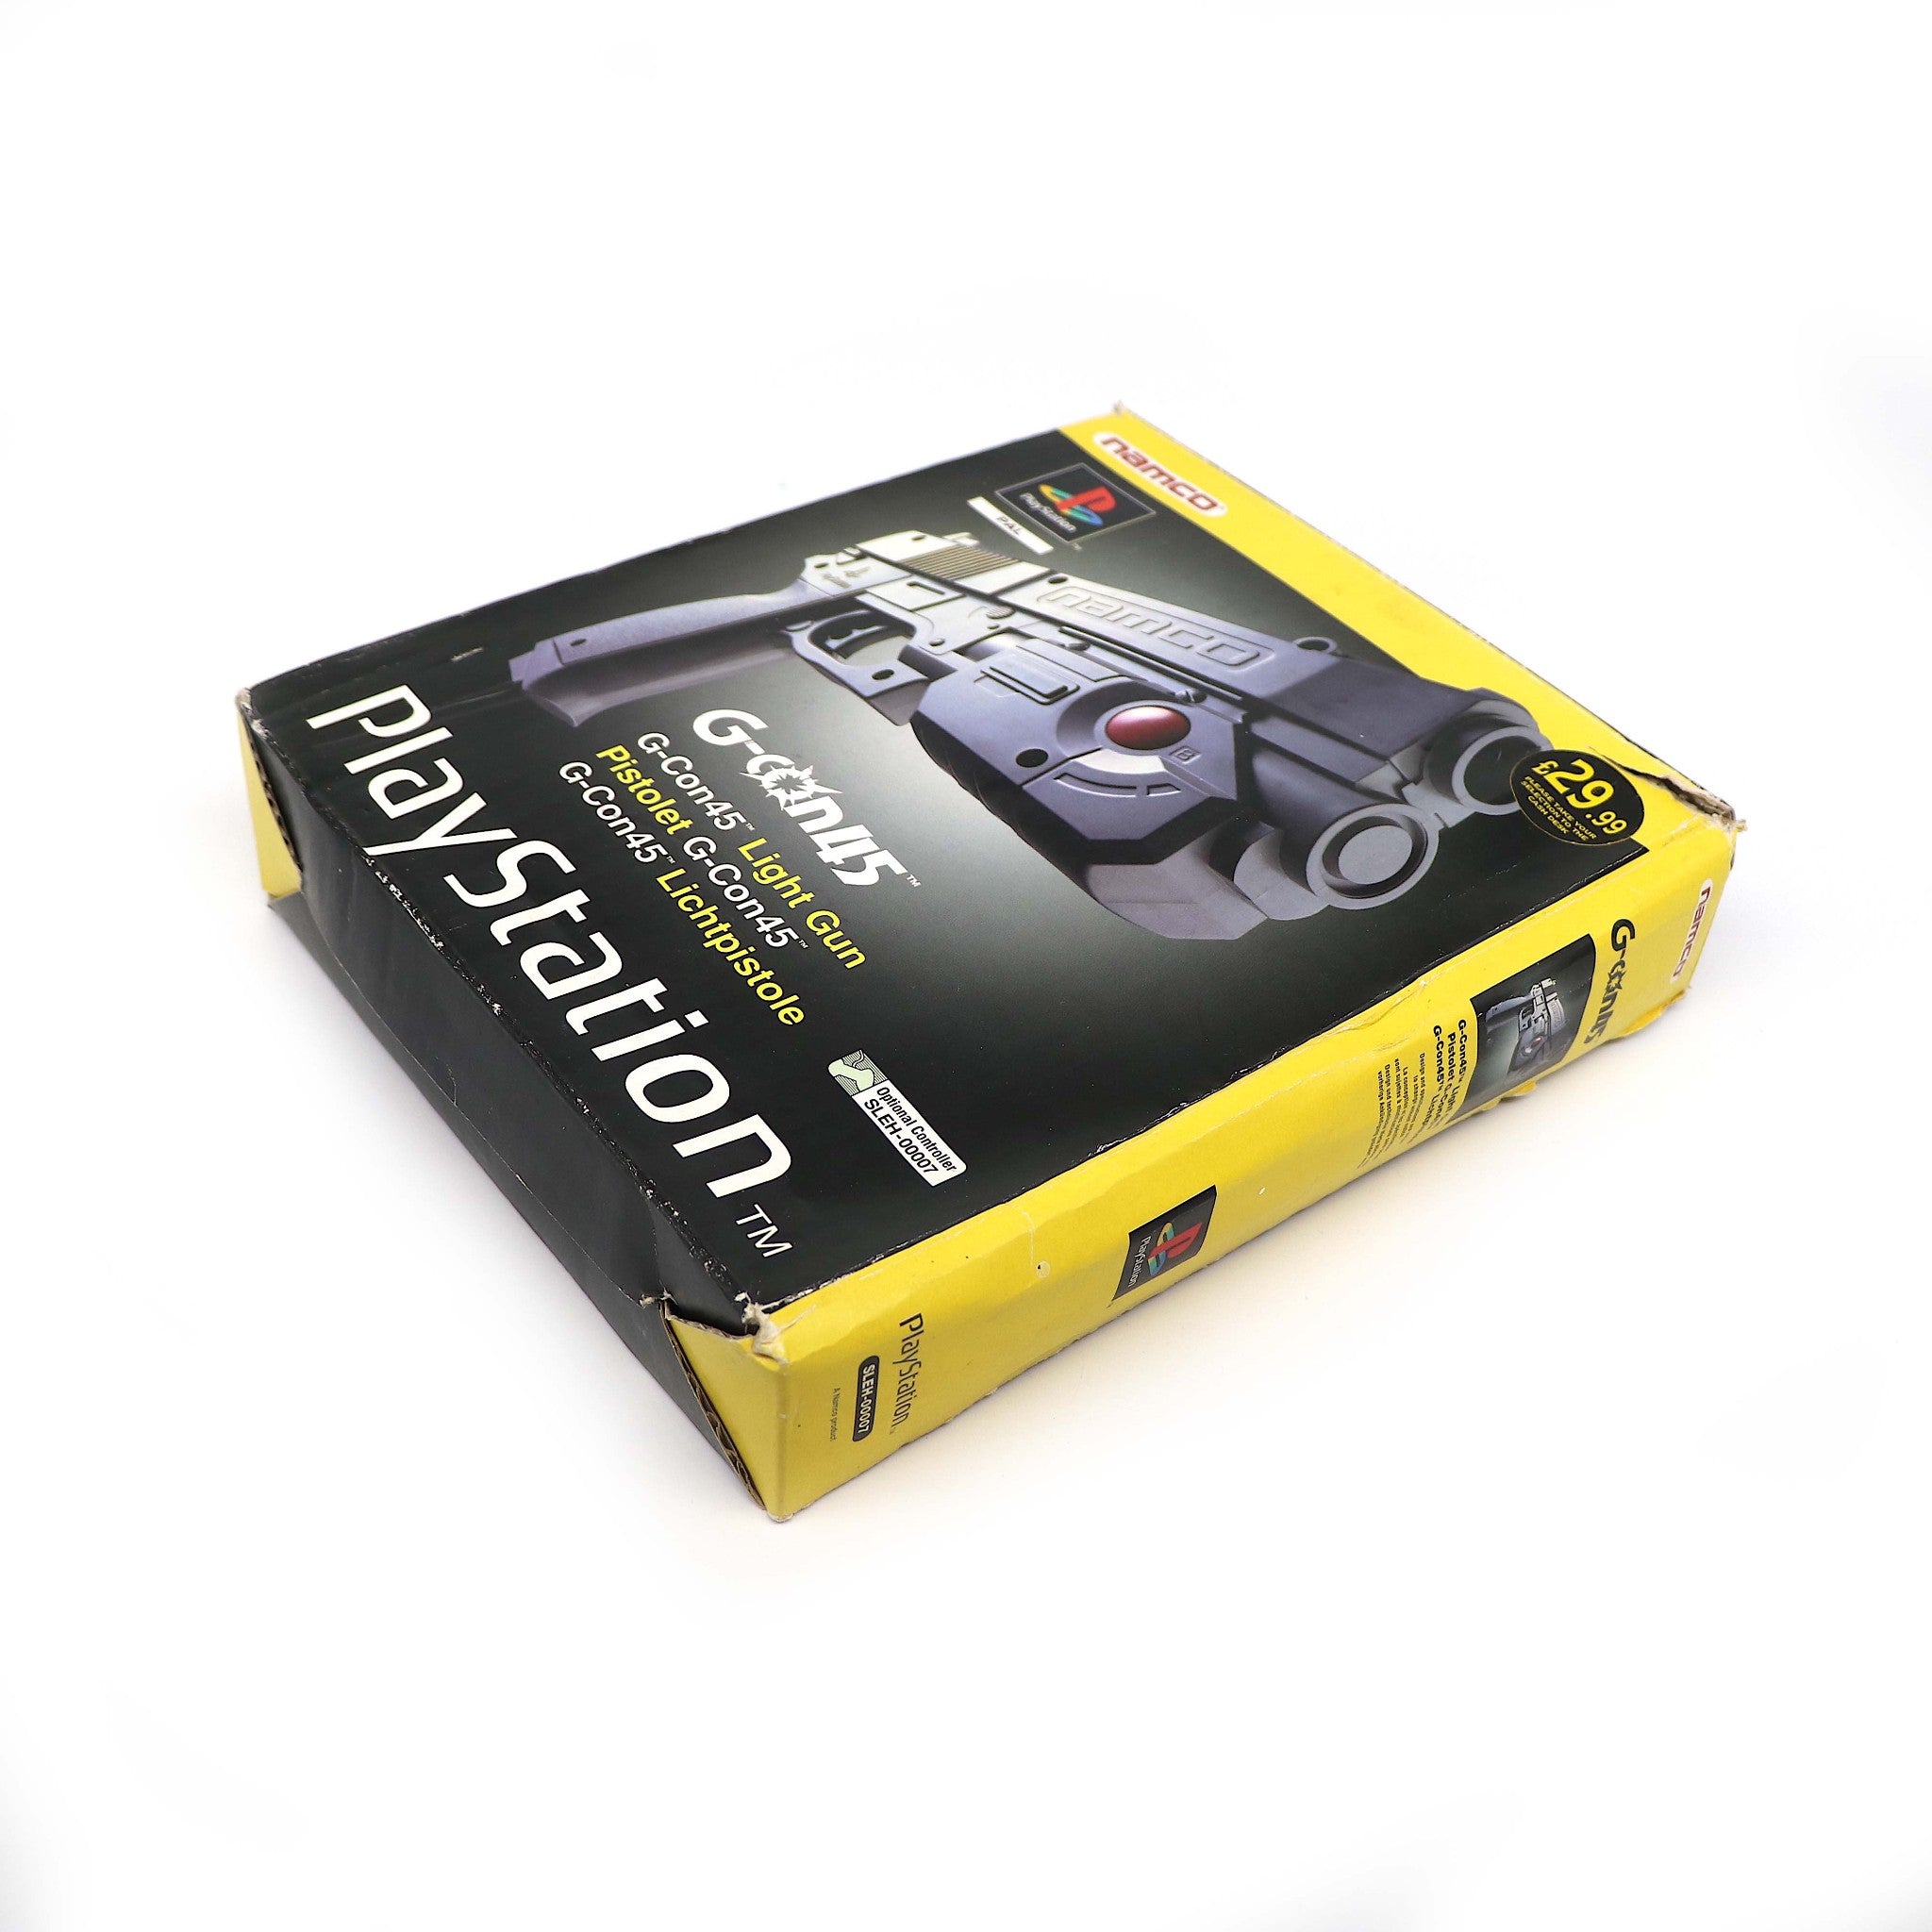 G-Con 45 Namco Light Gun (NPC-103) & Adaptor | For Playstation PS1 PSOne | Boxed